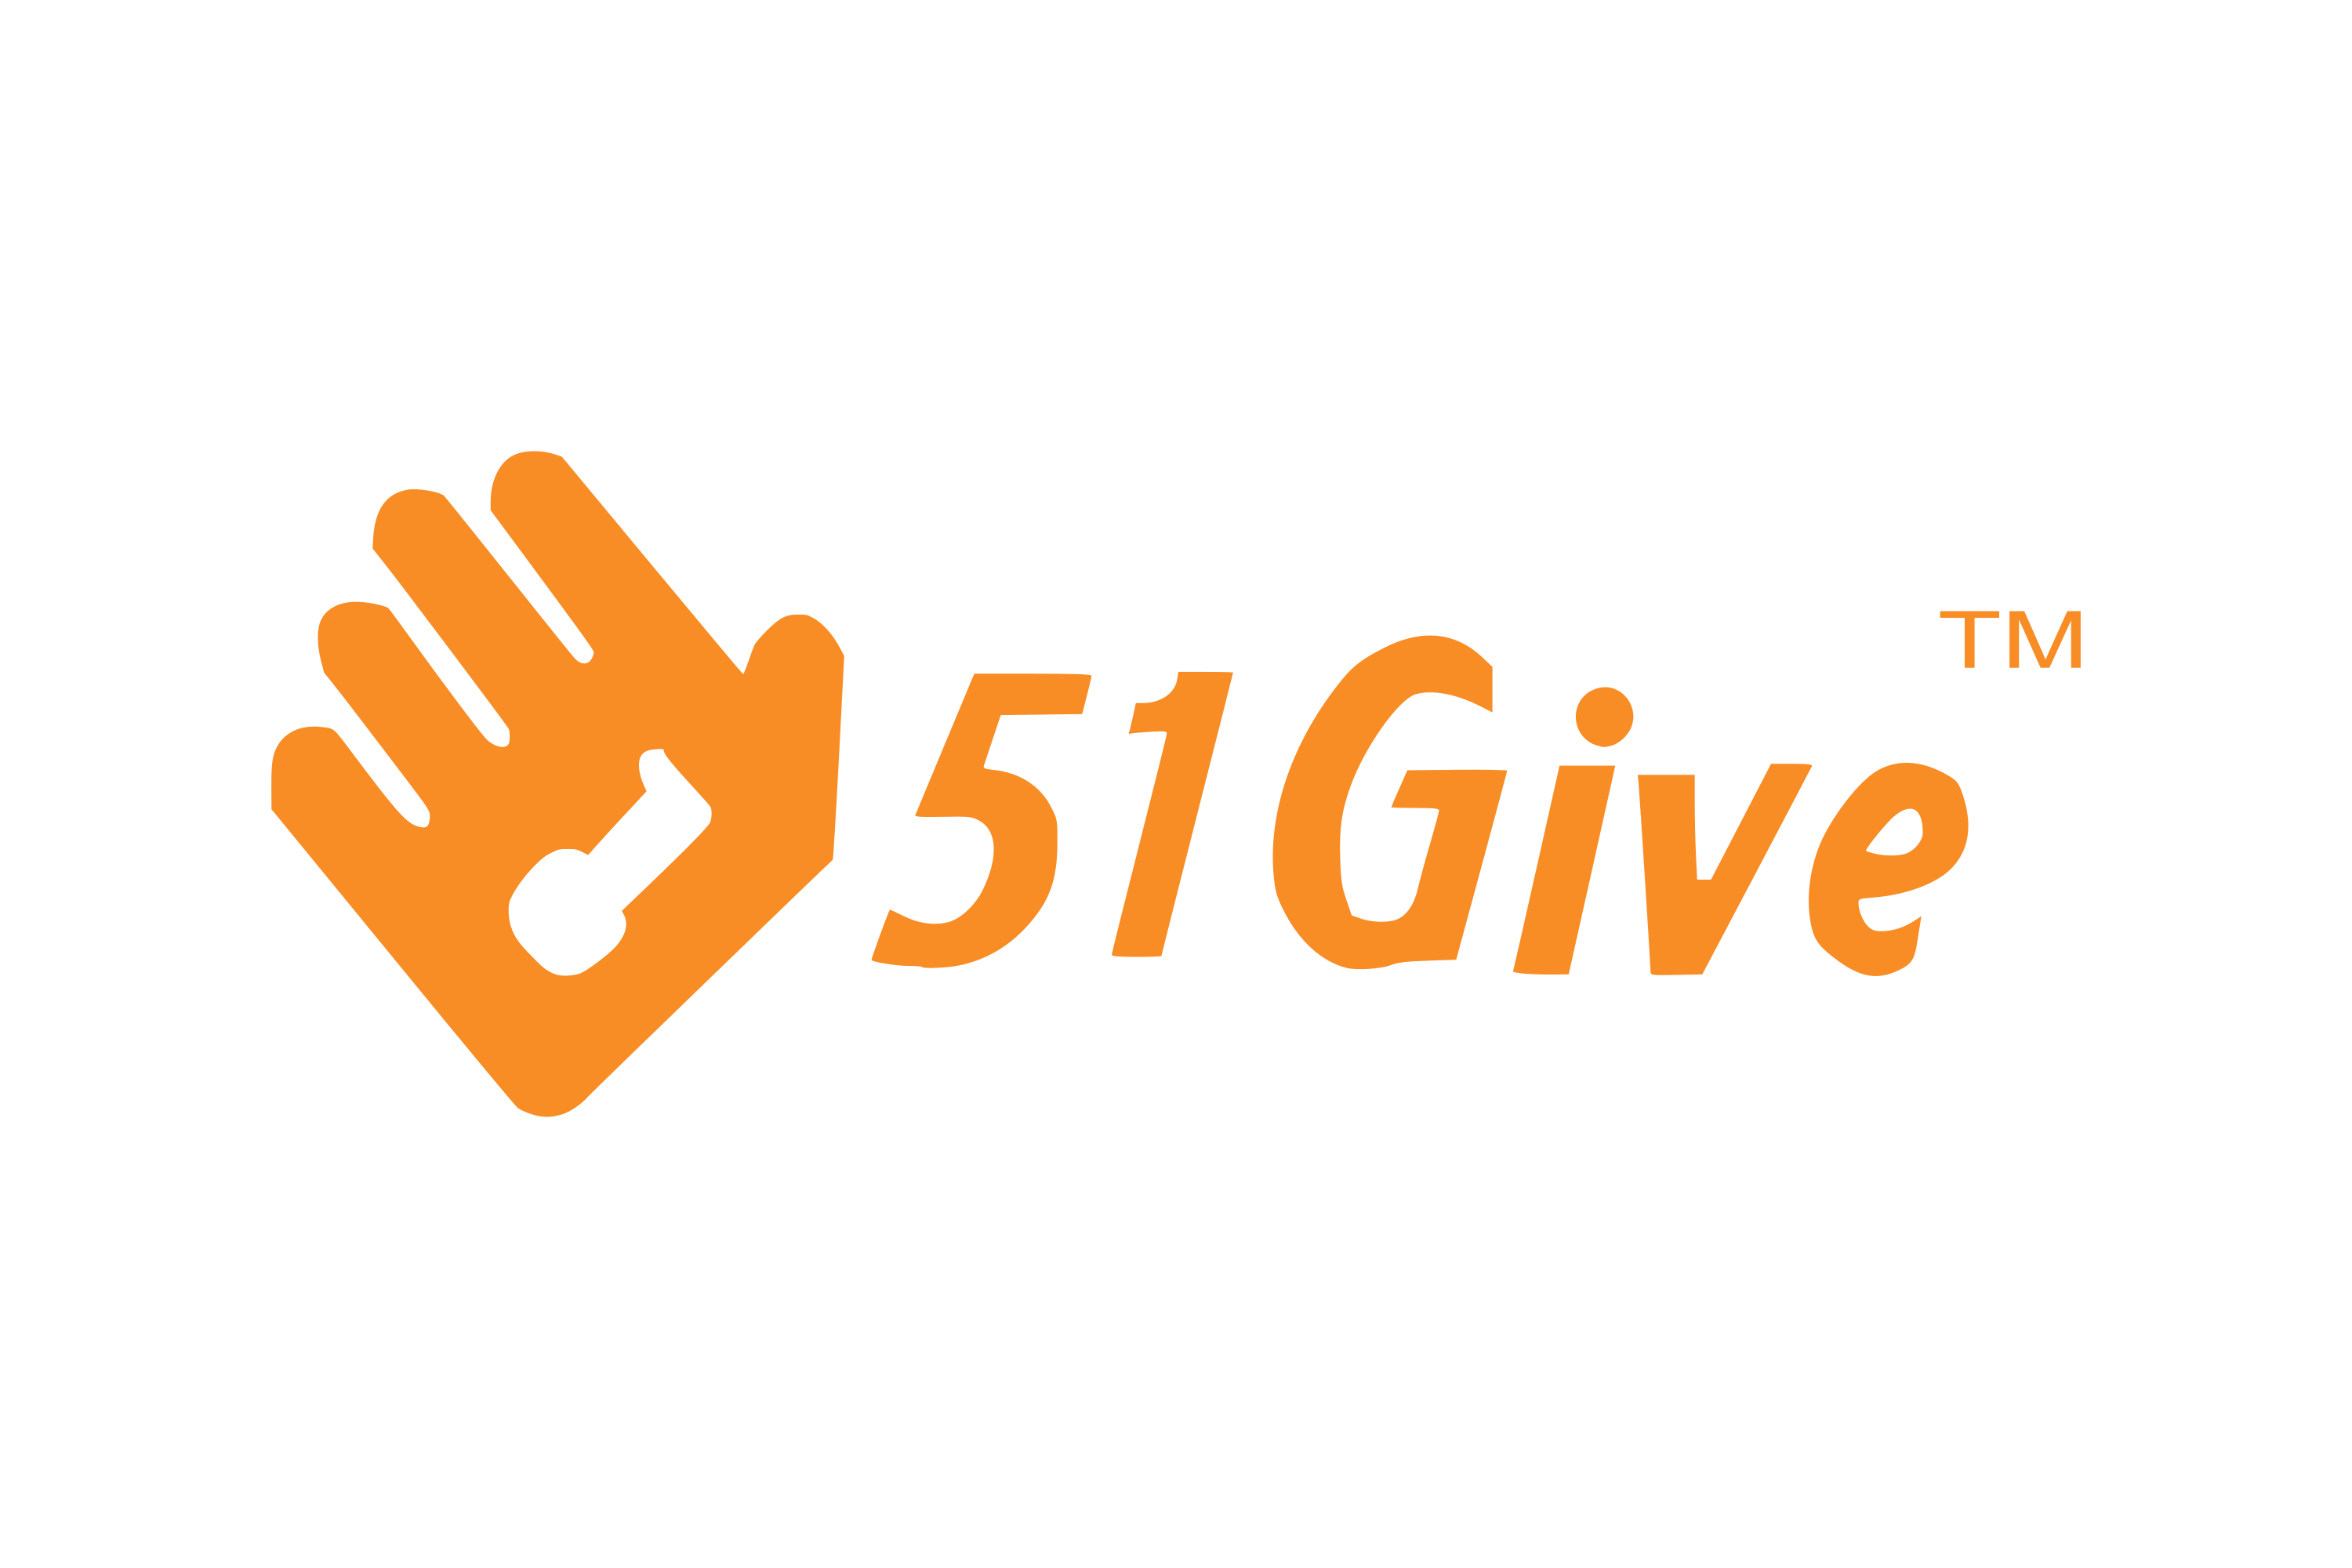 51give Logo